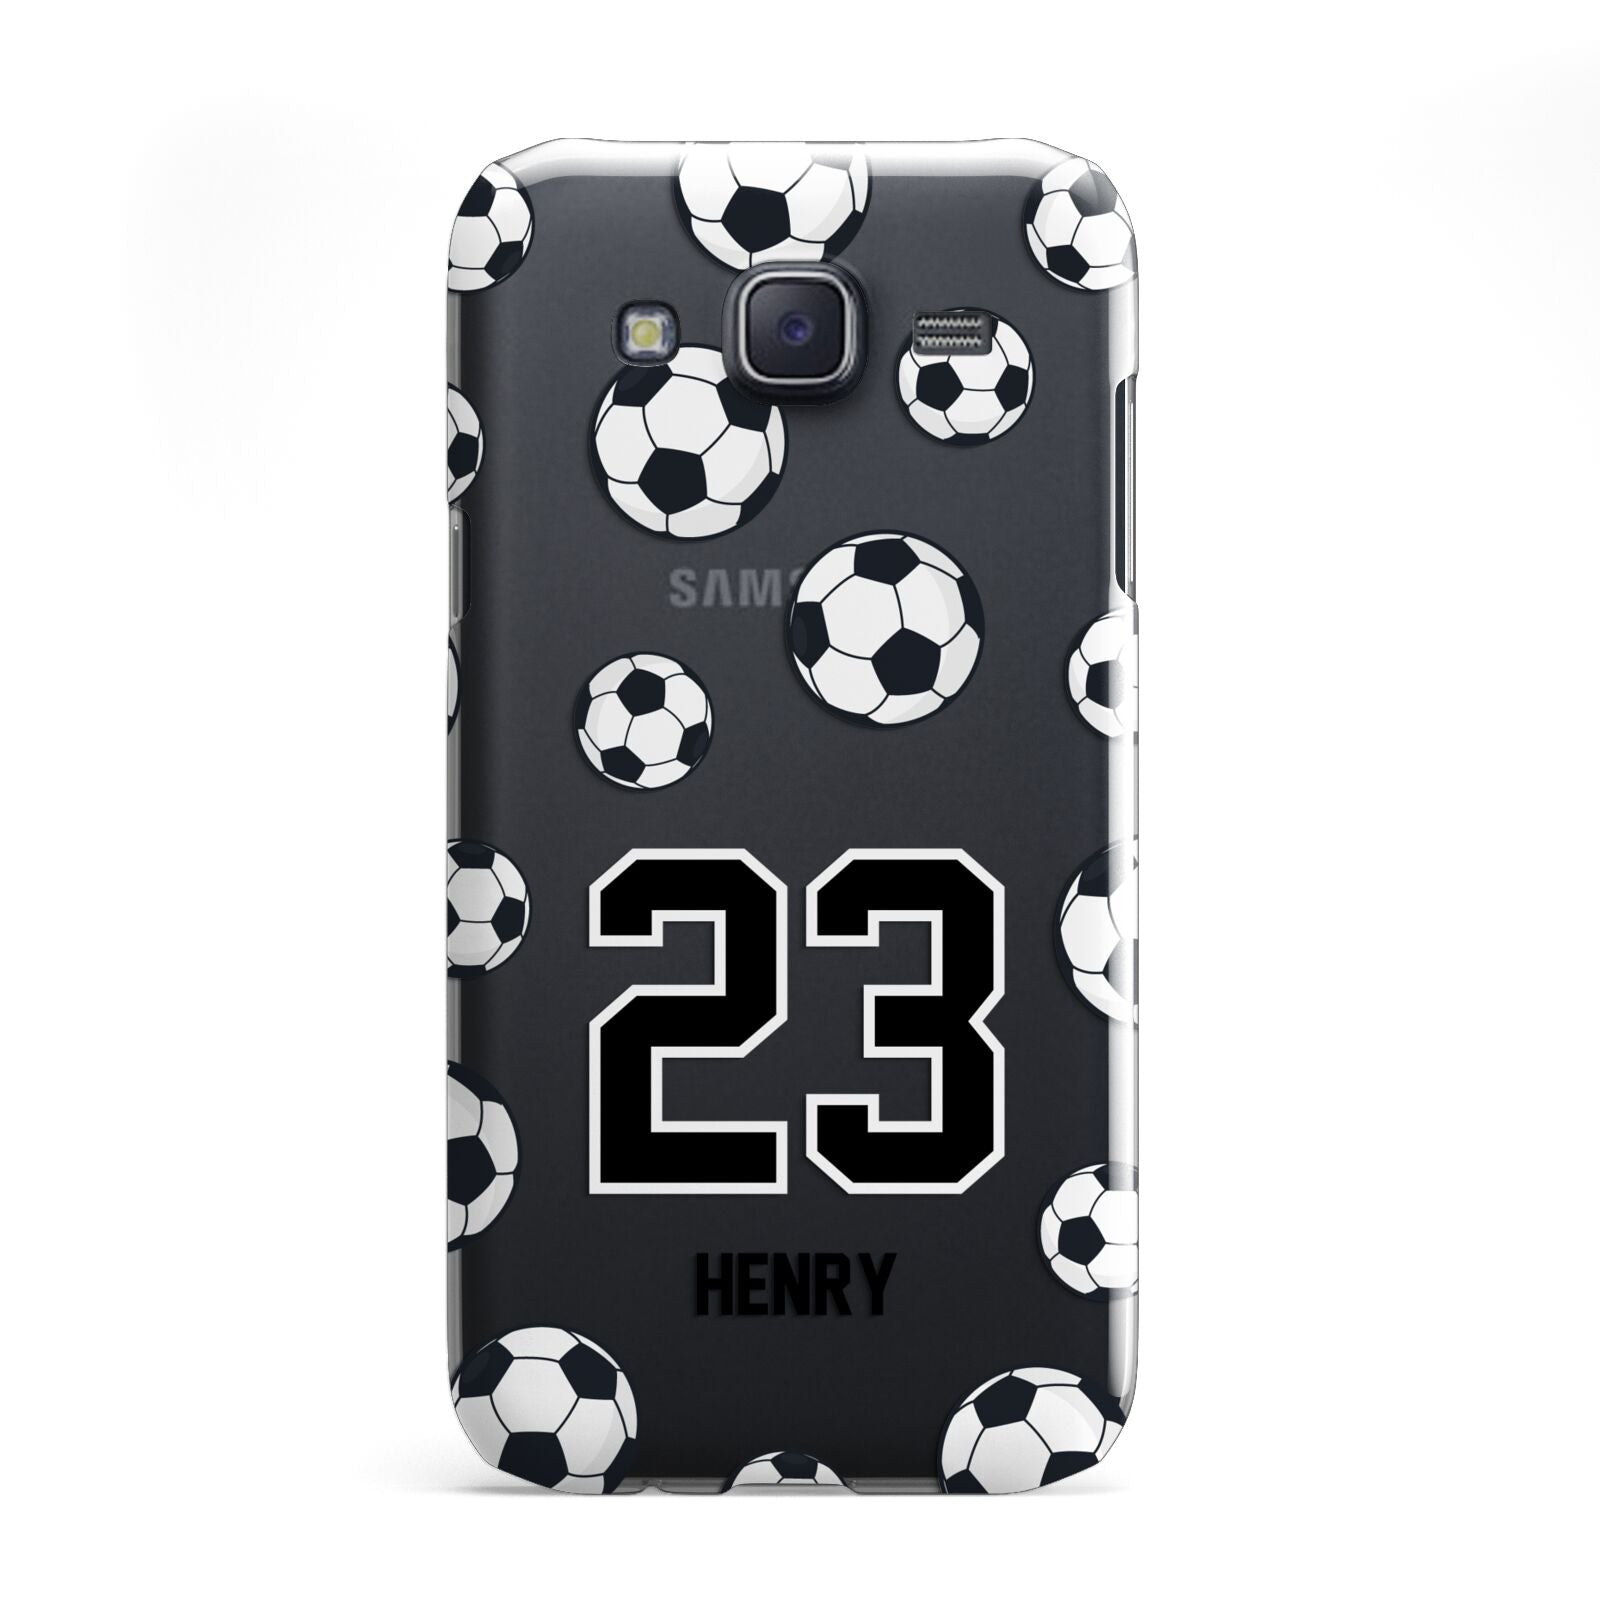 Personalised Football Samsung Galaxy J5 Case